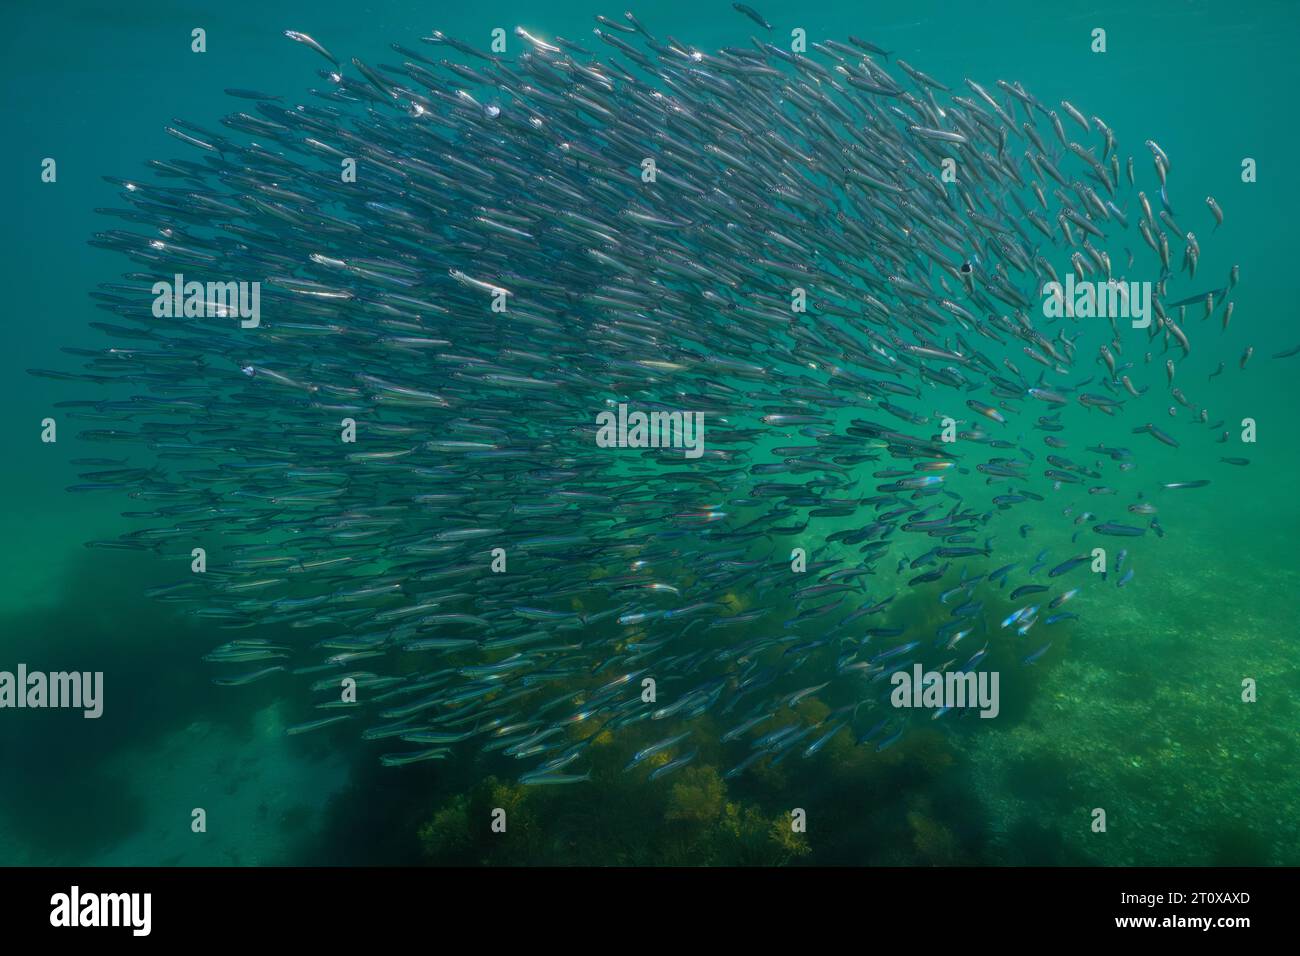 Anchovy fish school underwater in the Atlantic ocean, European anchovy Engraulis encrasicolus, natural scene, Spain, Galicia, Rias Baixas Stock Photo